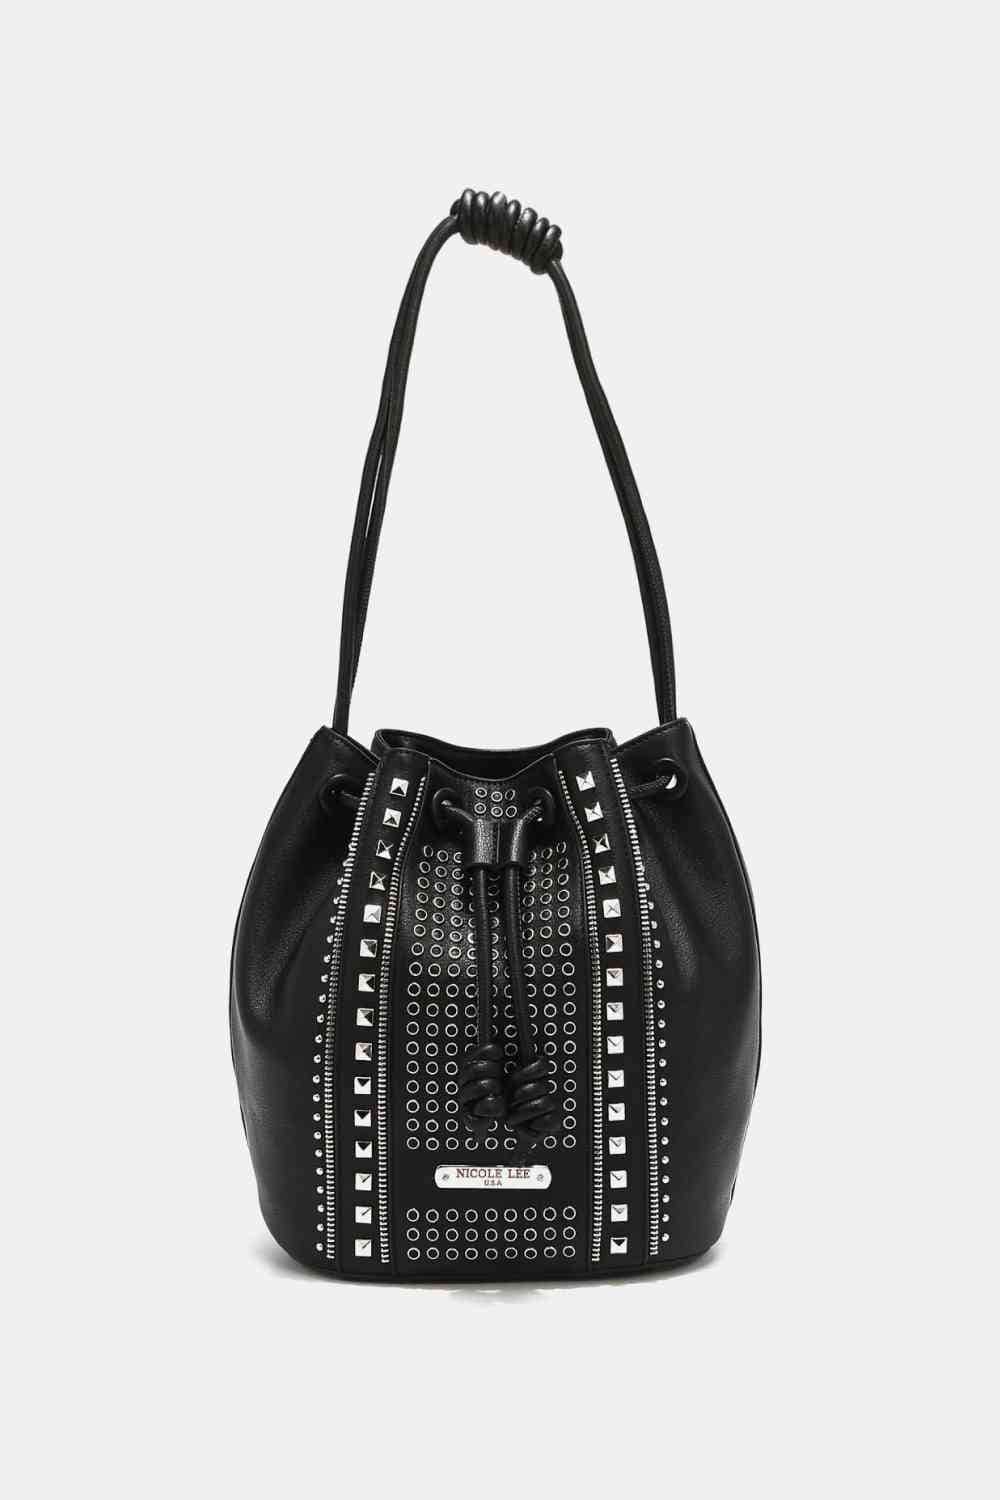 Nicole Lee USA Amy Studded Bucket Bag Black / One Size